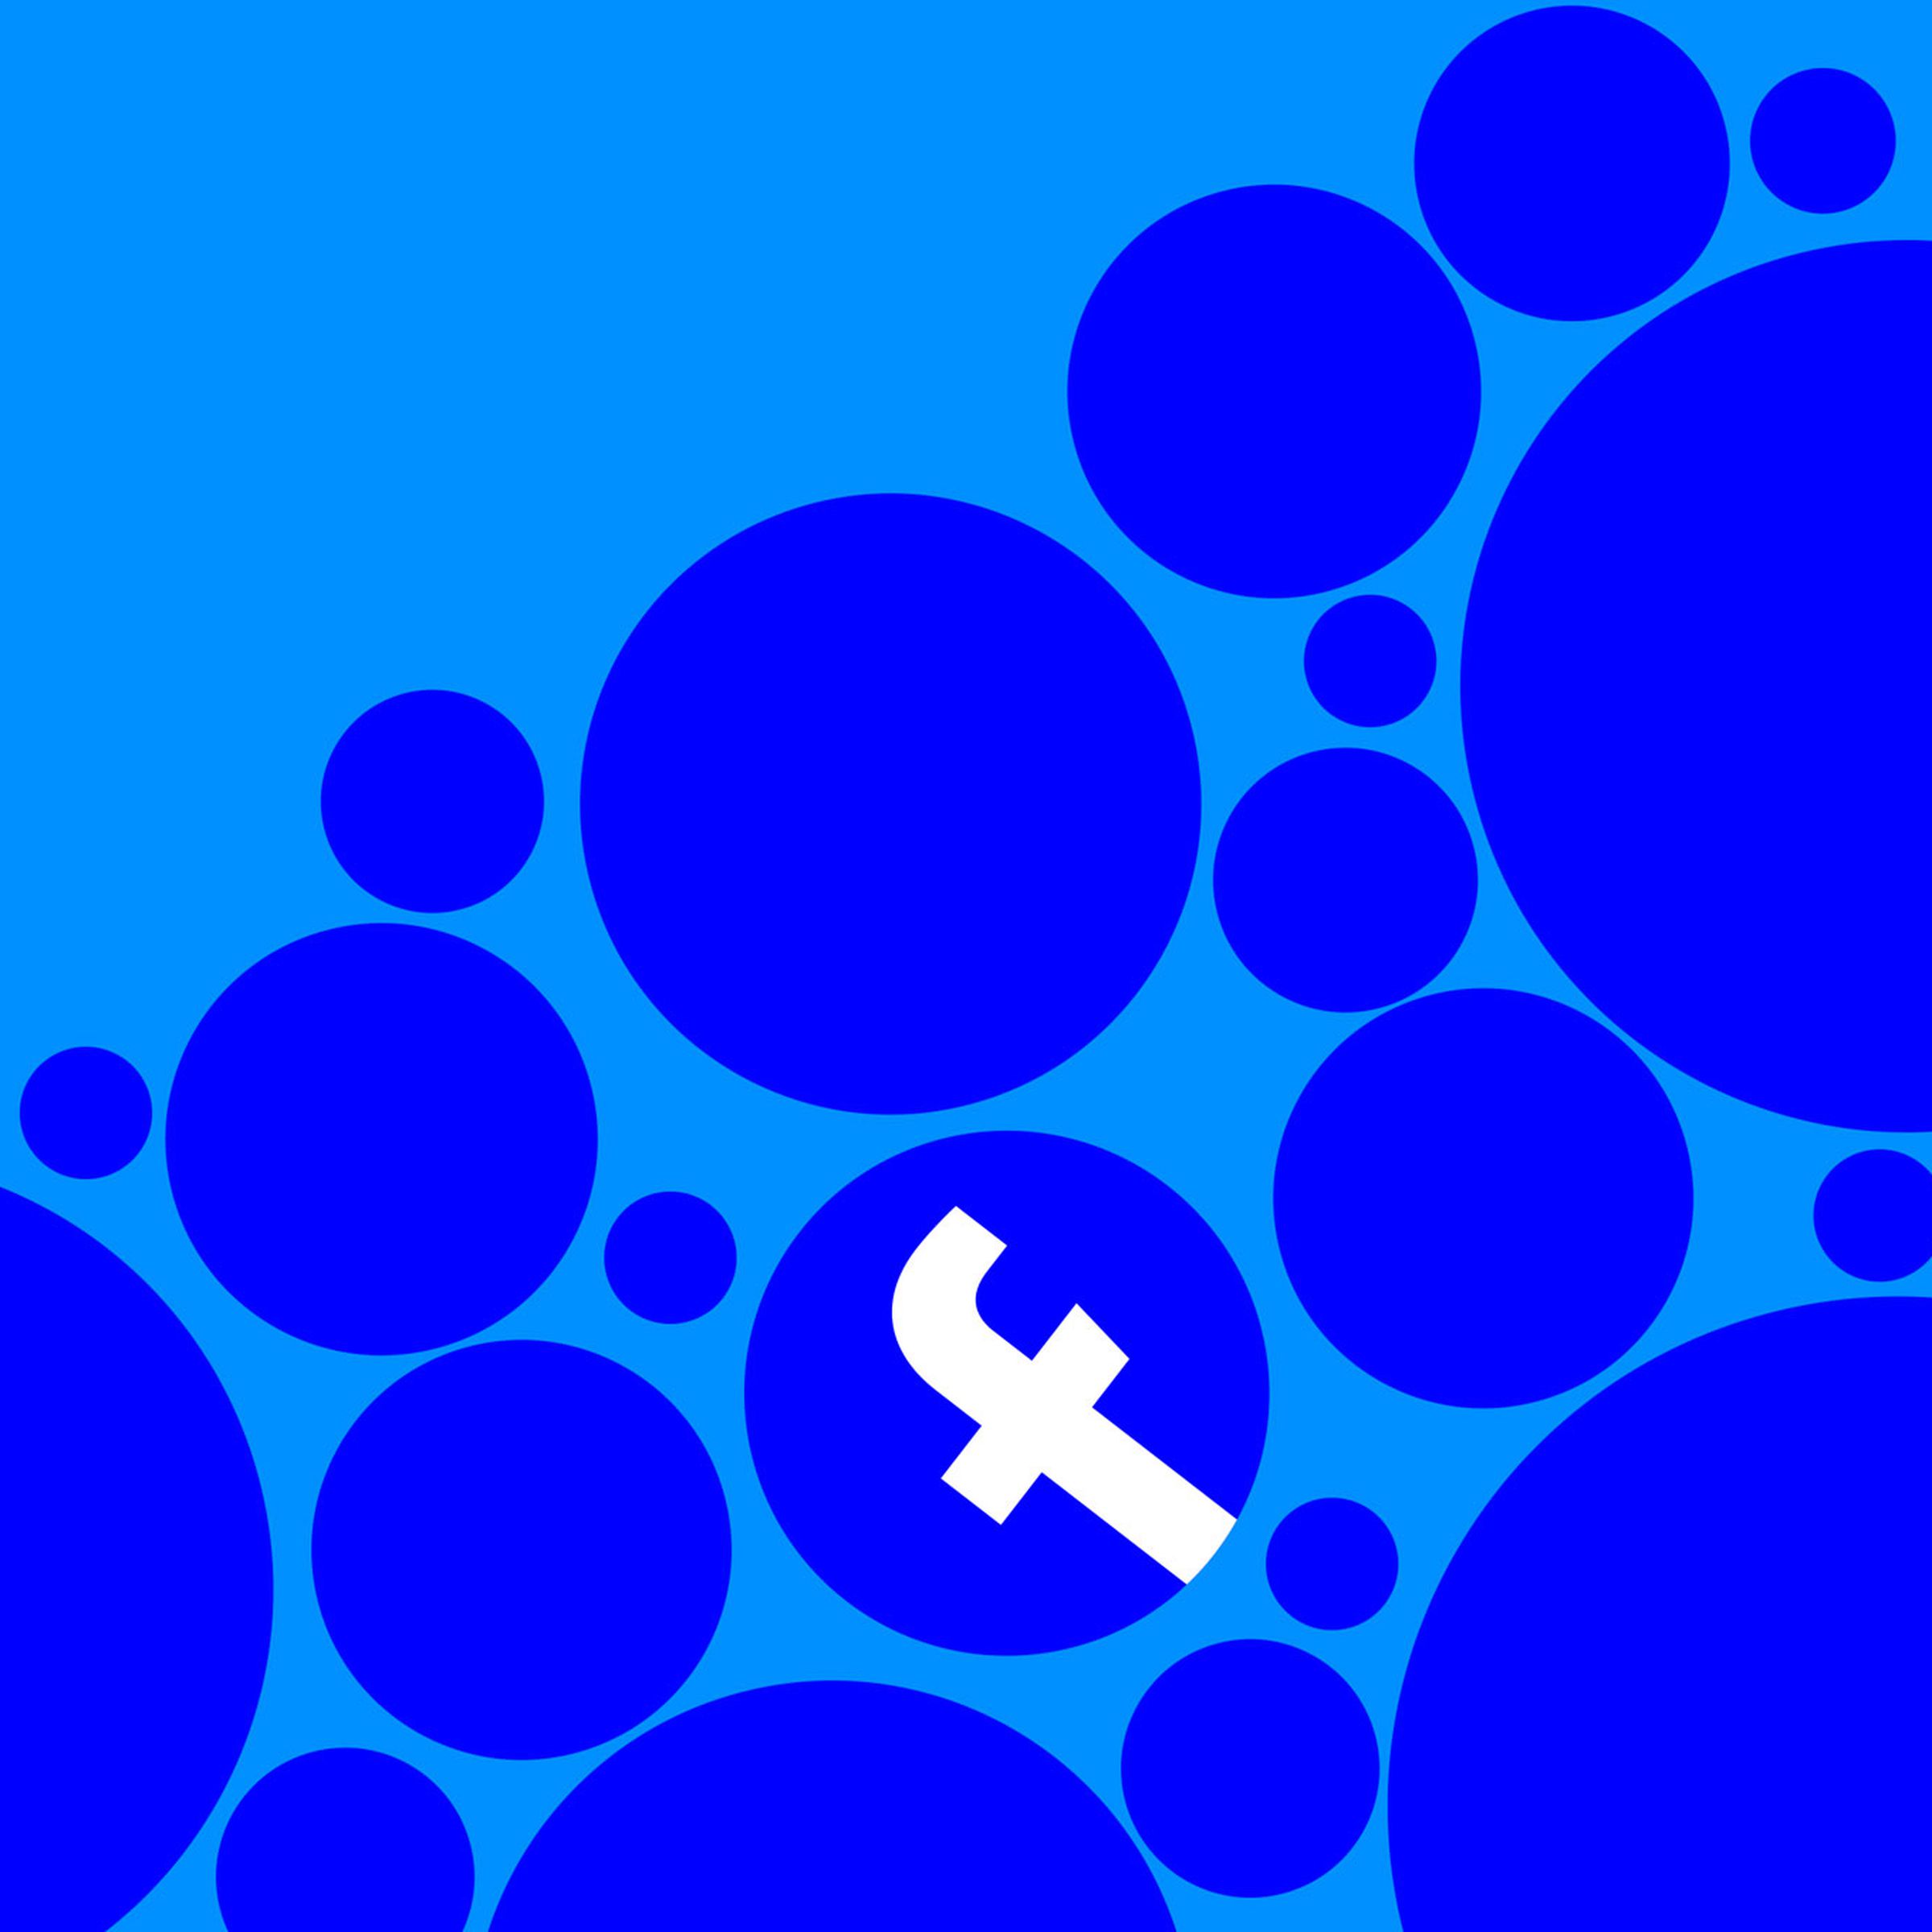 An illustration of Facebook’s logo on a blue background